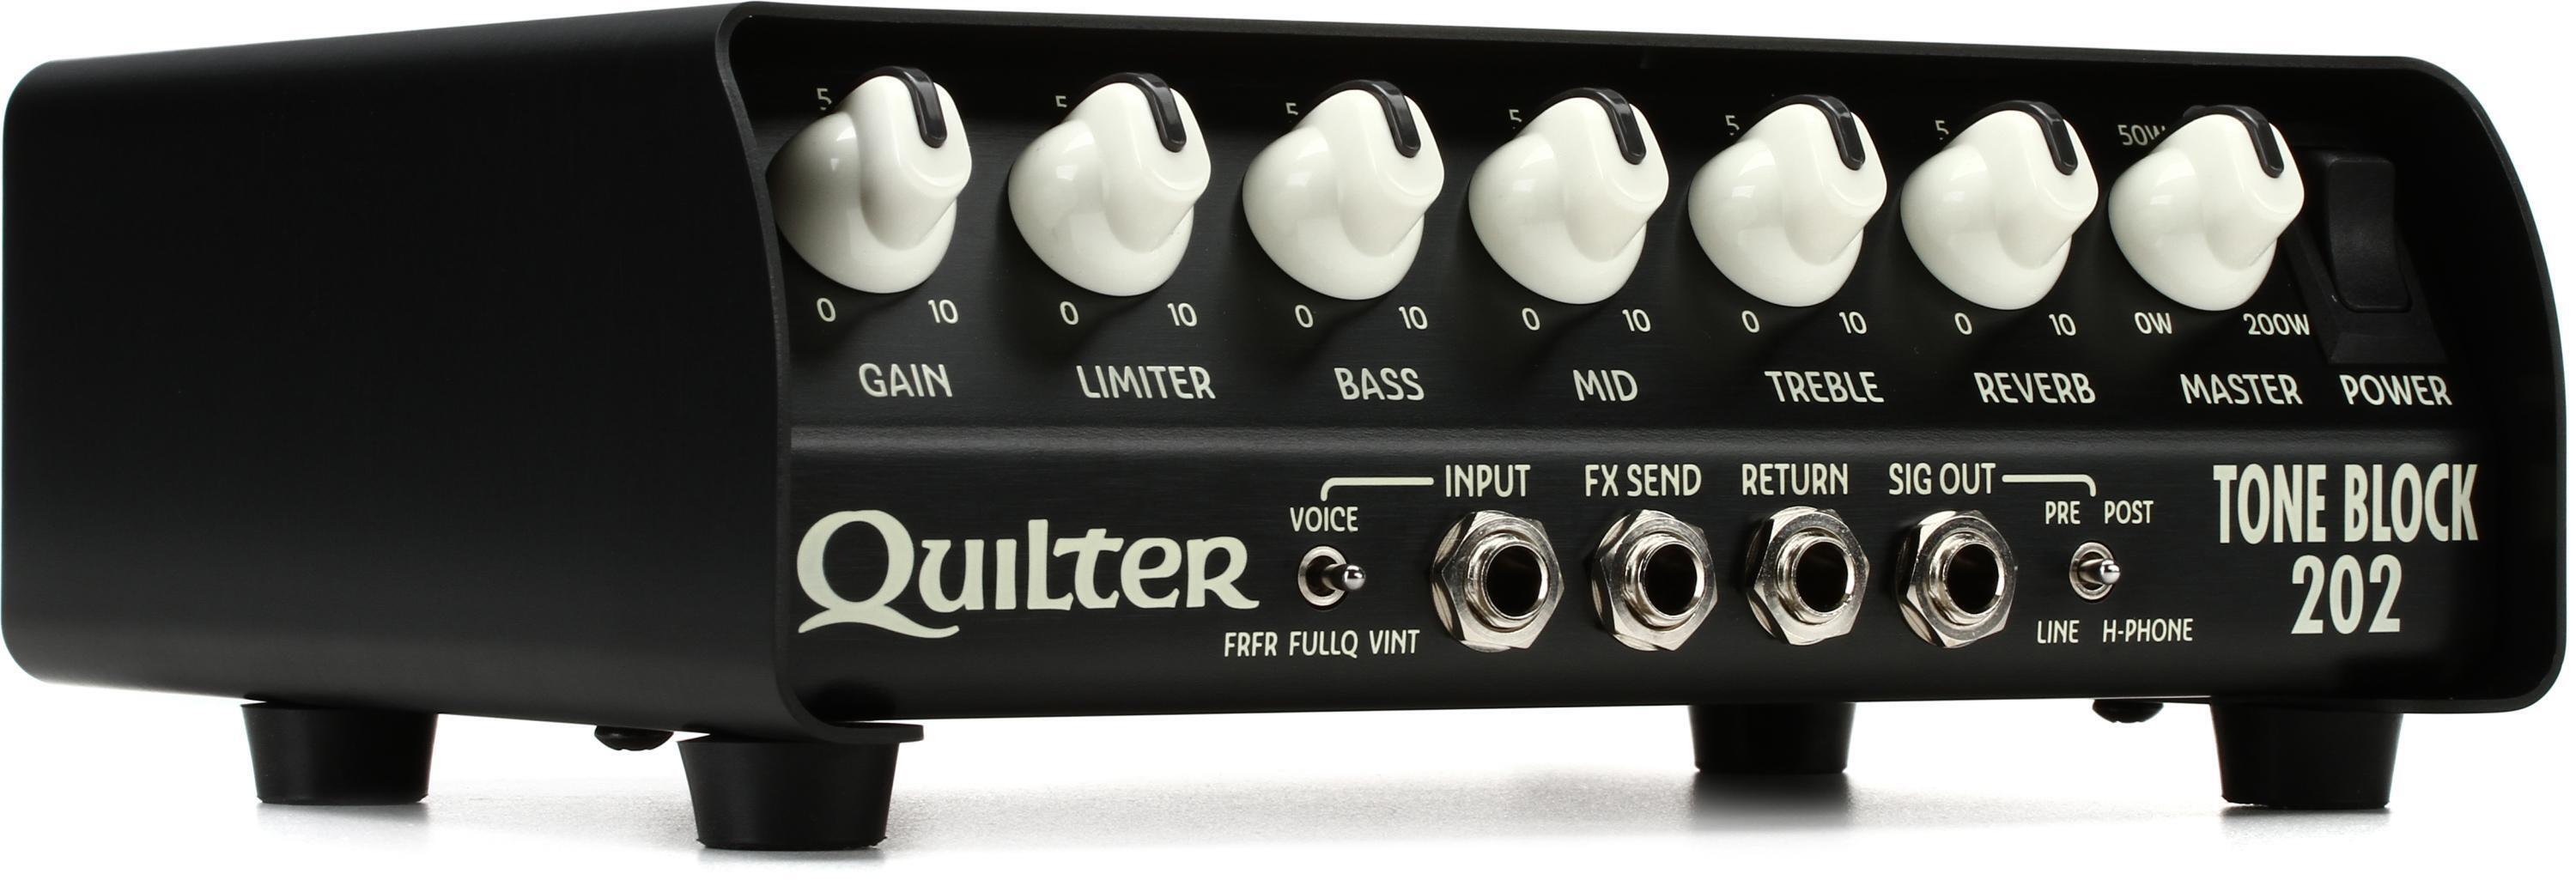 Quilter Tone Block 202 + BLOCKDOCK 12 HD-